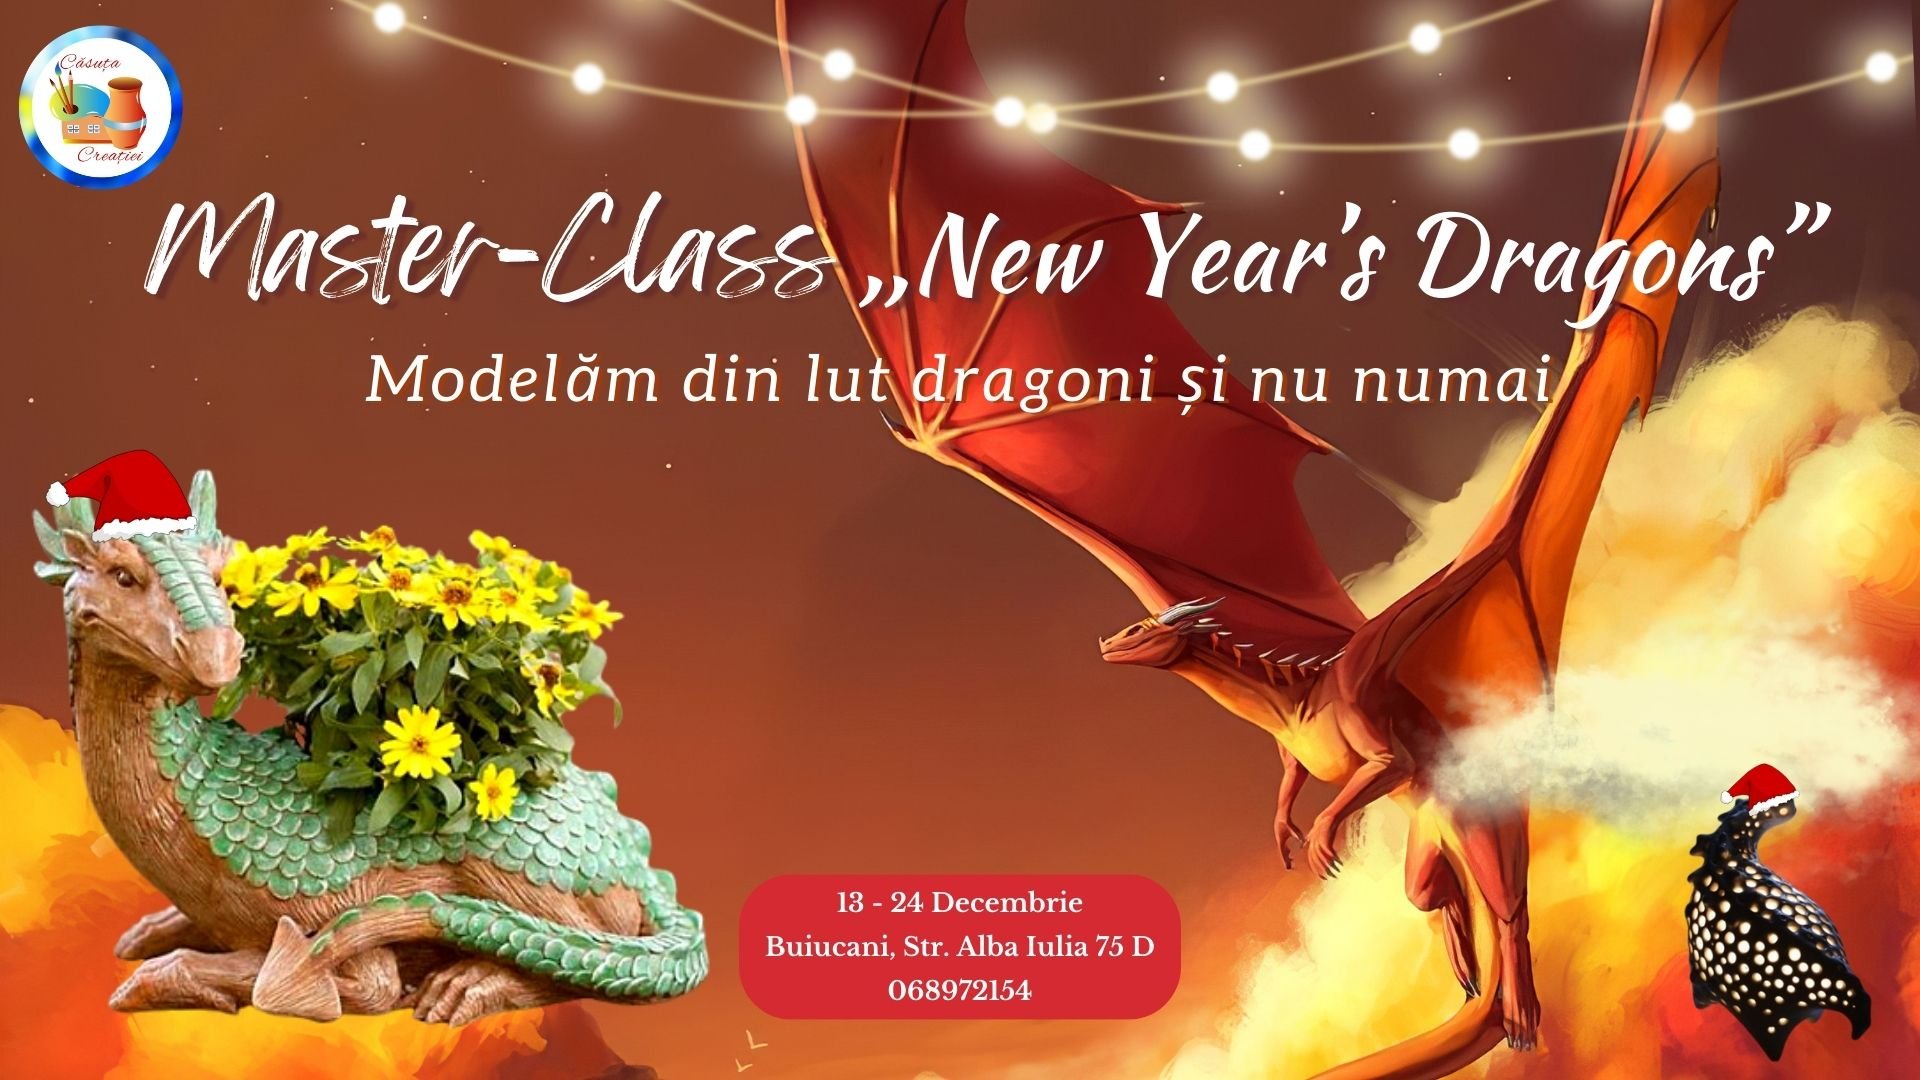 Master-Class de ceramică "New Year's Dragons"